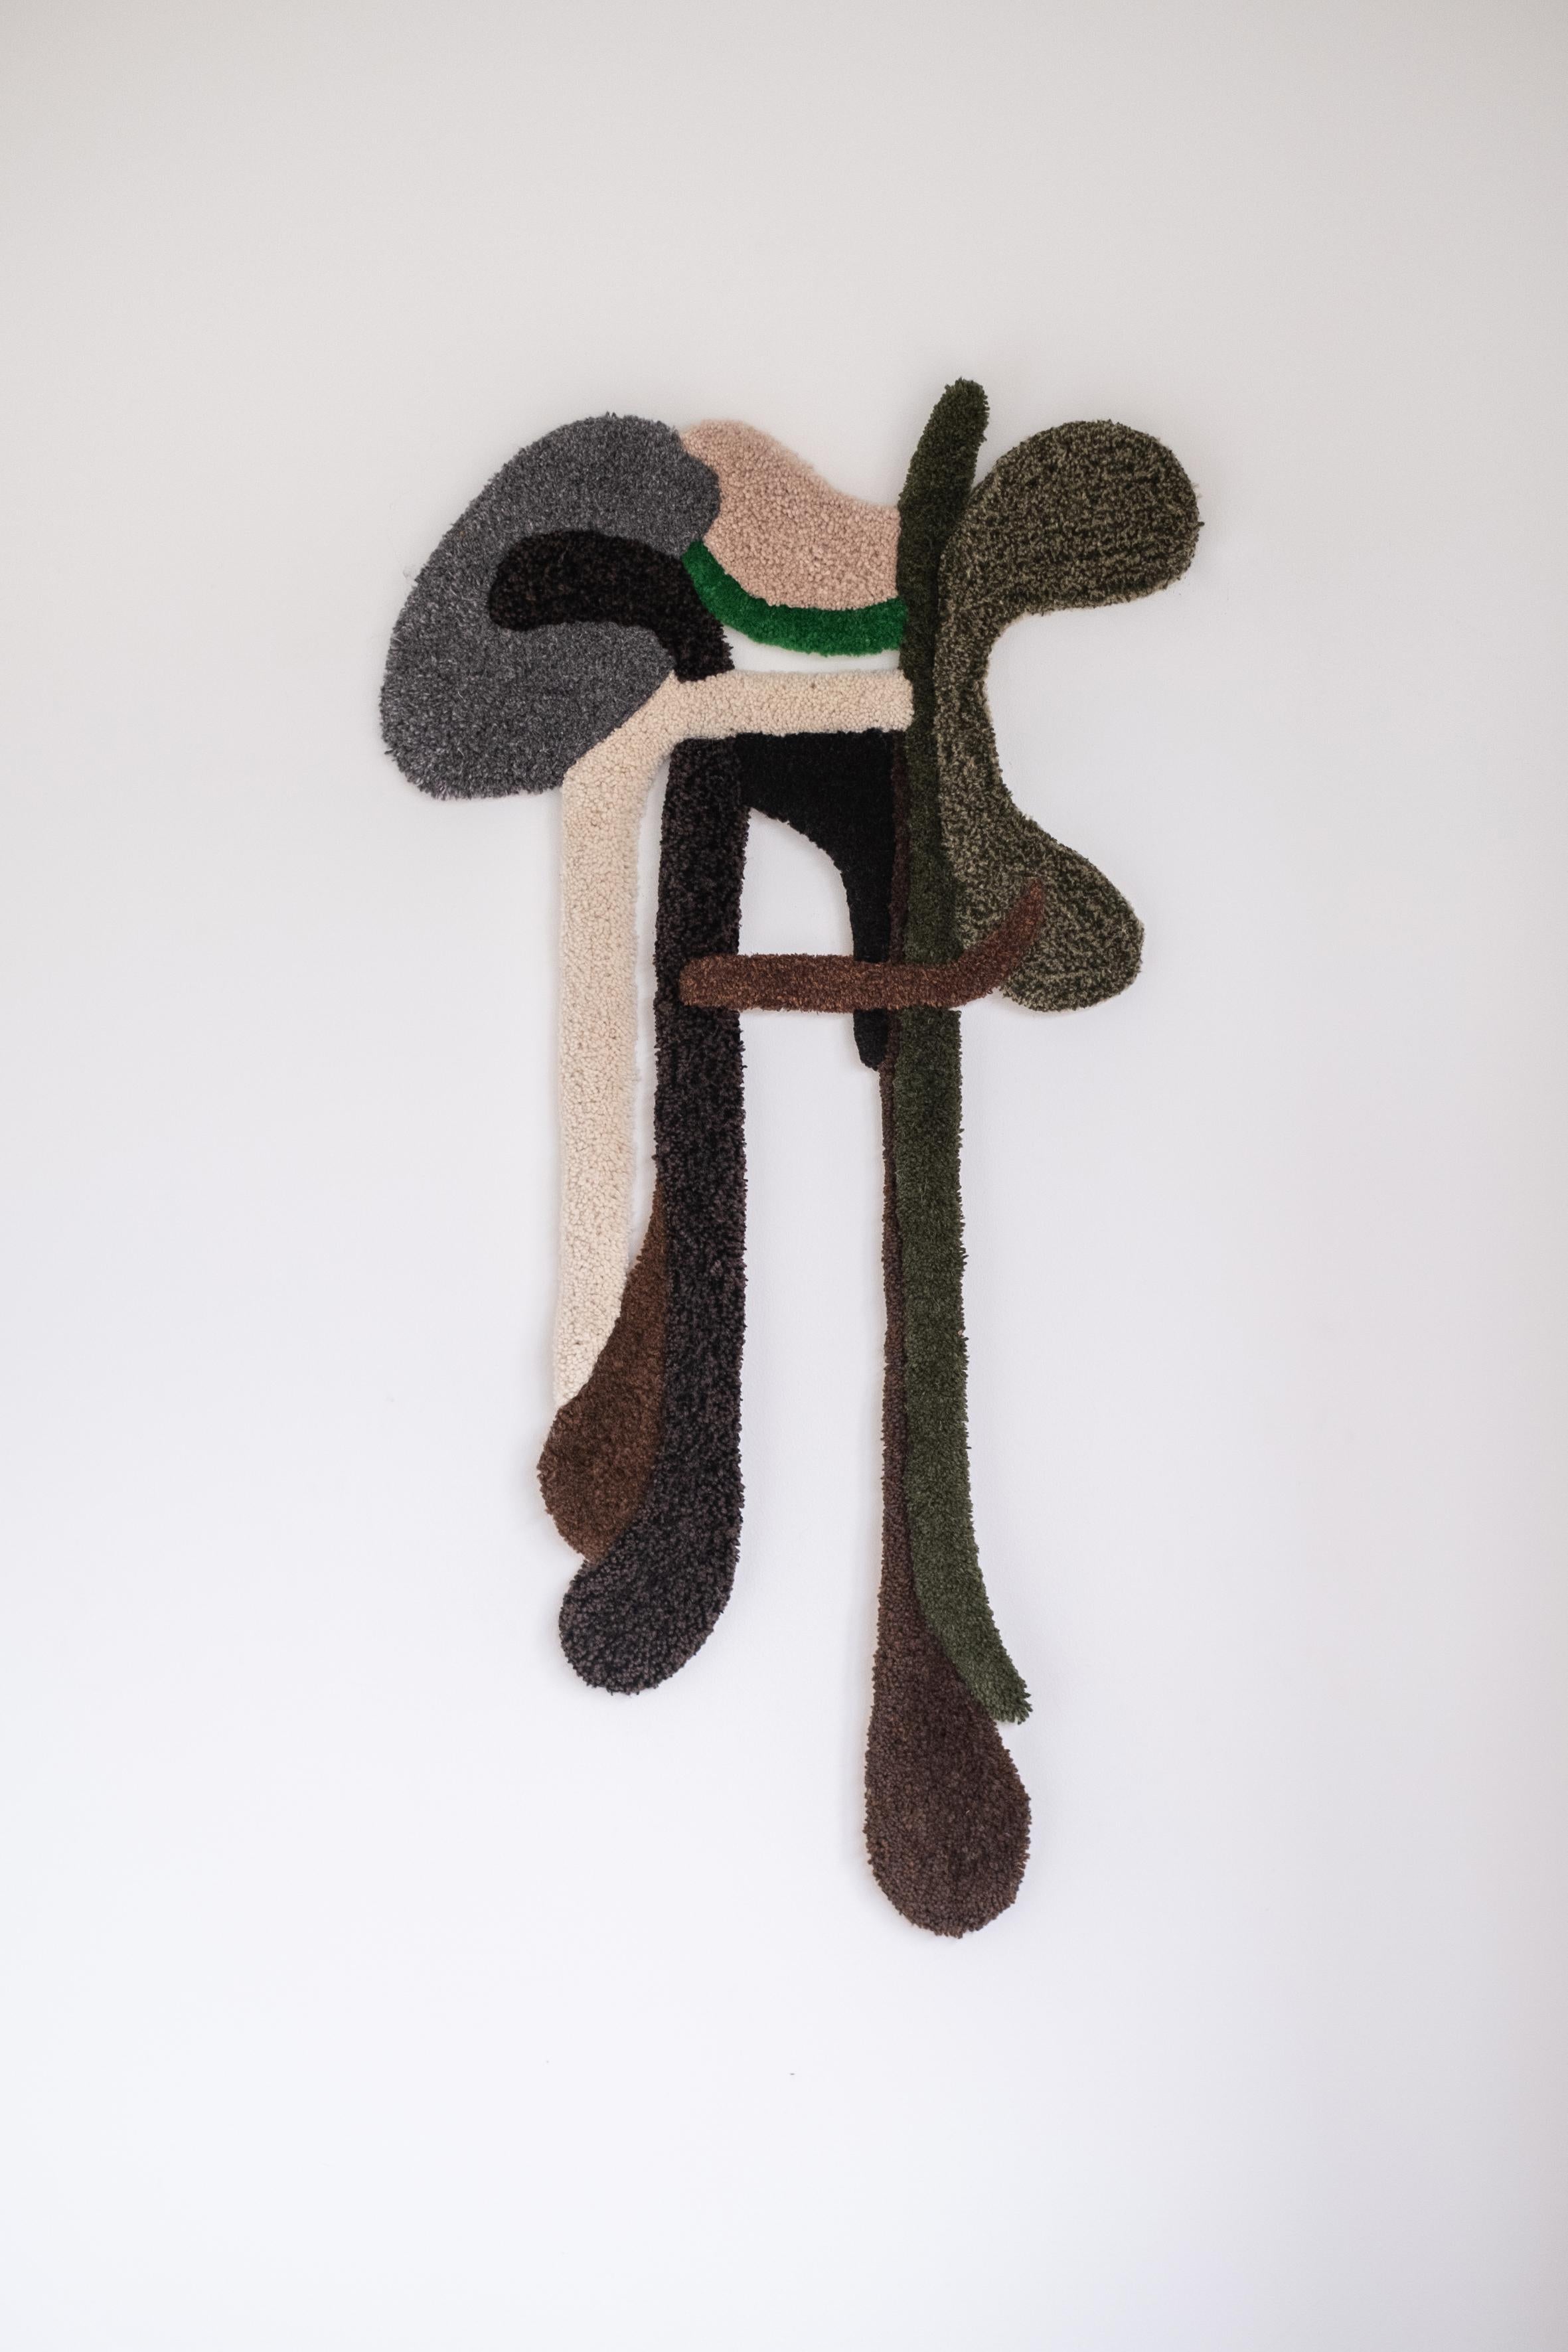 Belgian Opus XLIII Handmade Wool Tapestry by Mira Sohlen For Sale